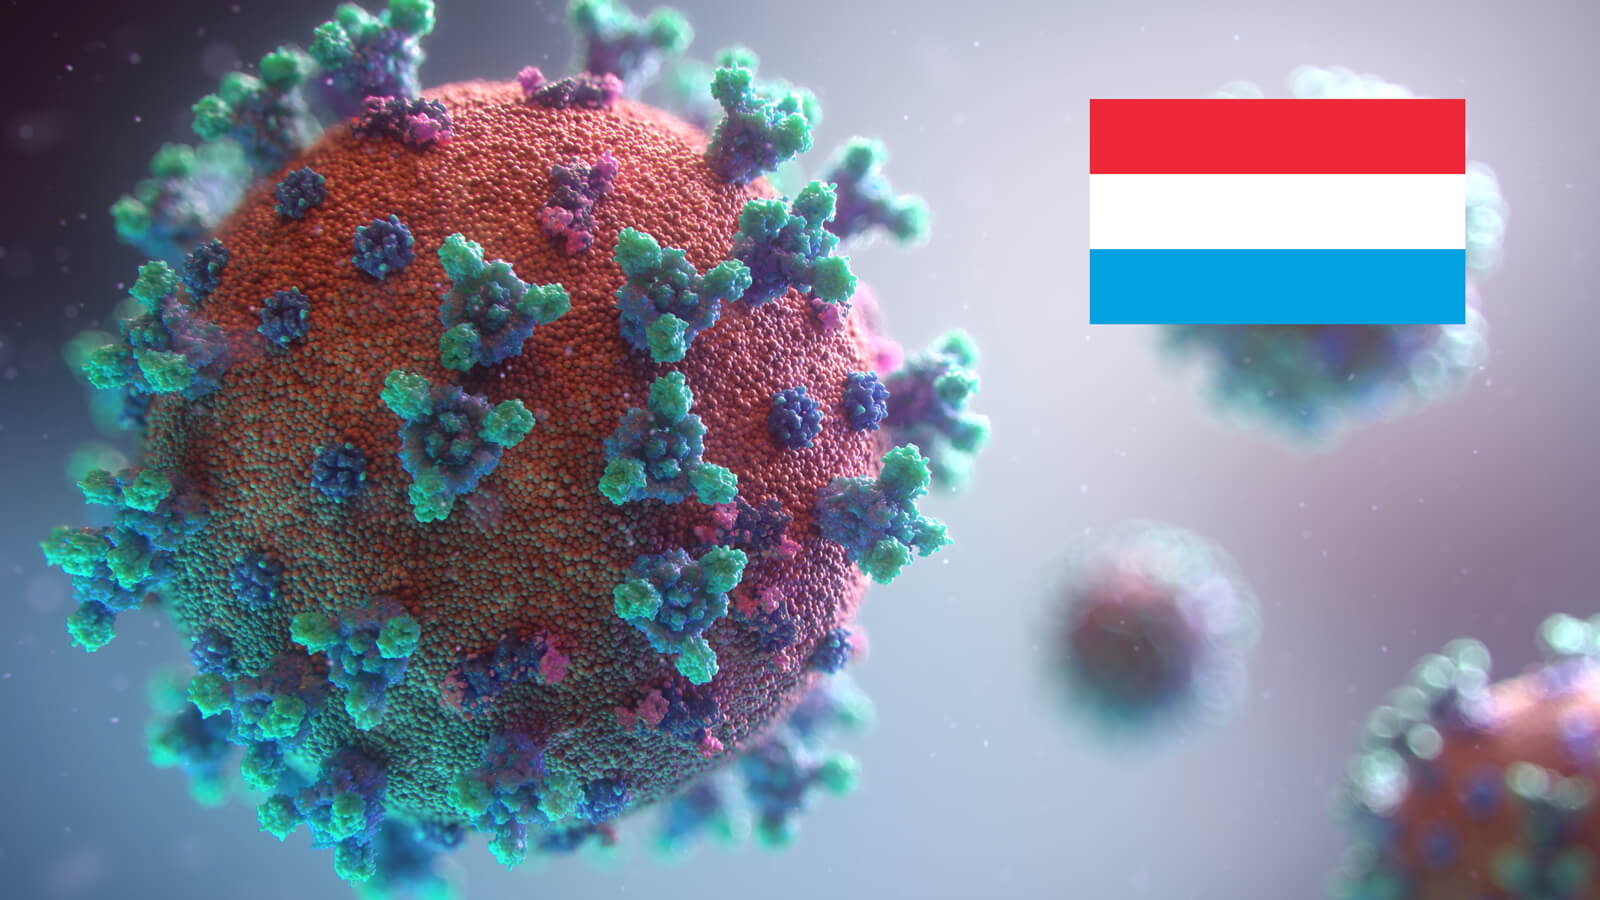 Darstellung Corona Virus mit luxemburgischer Flagge oben rechts